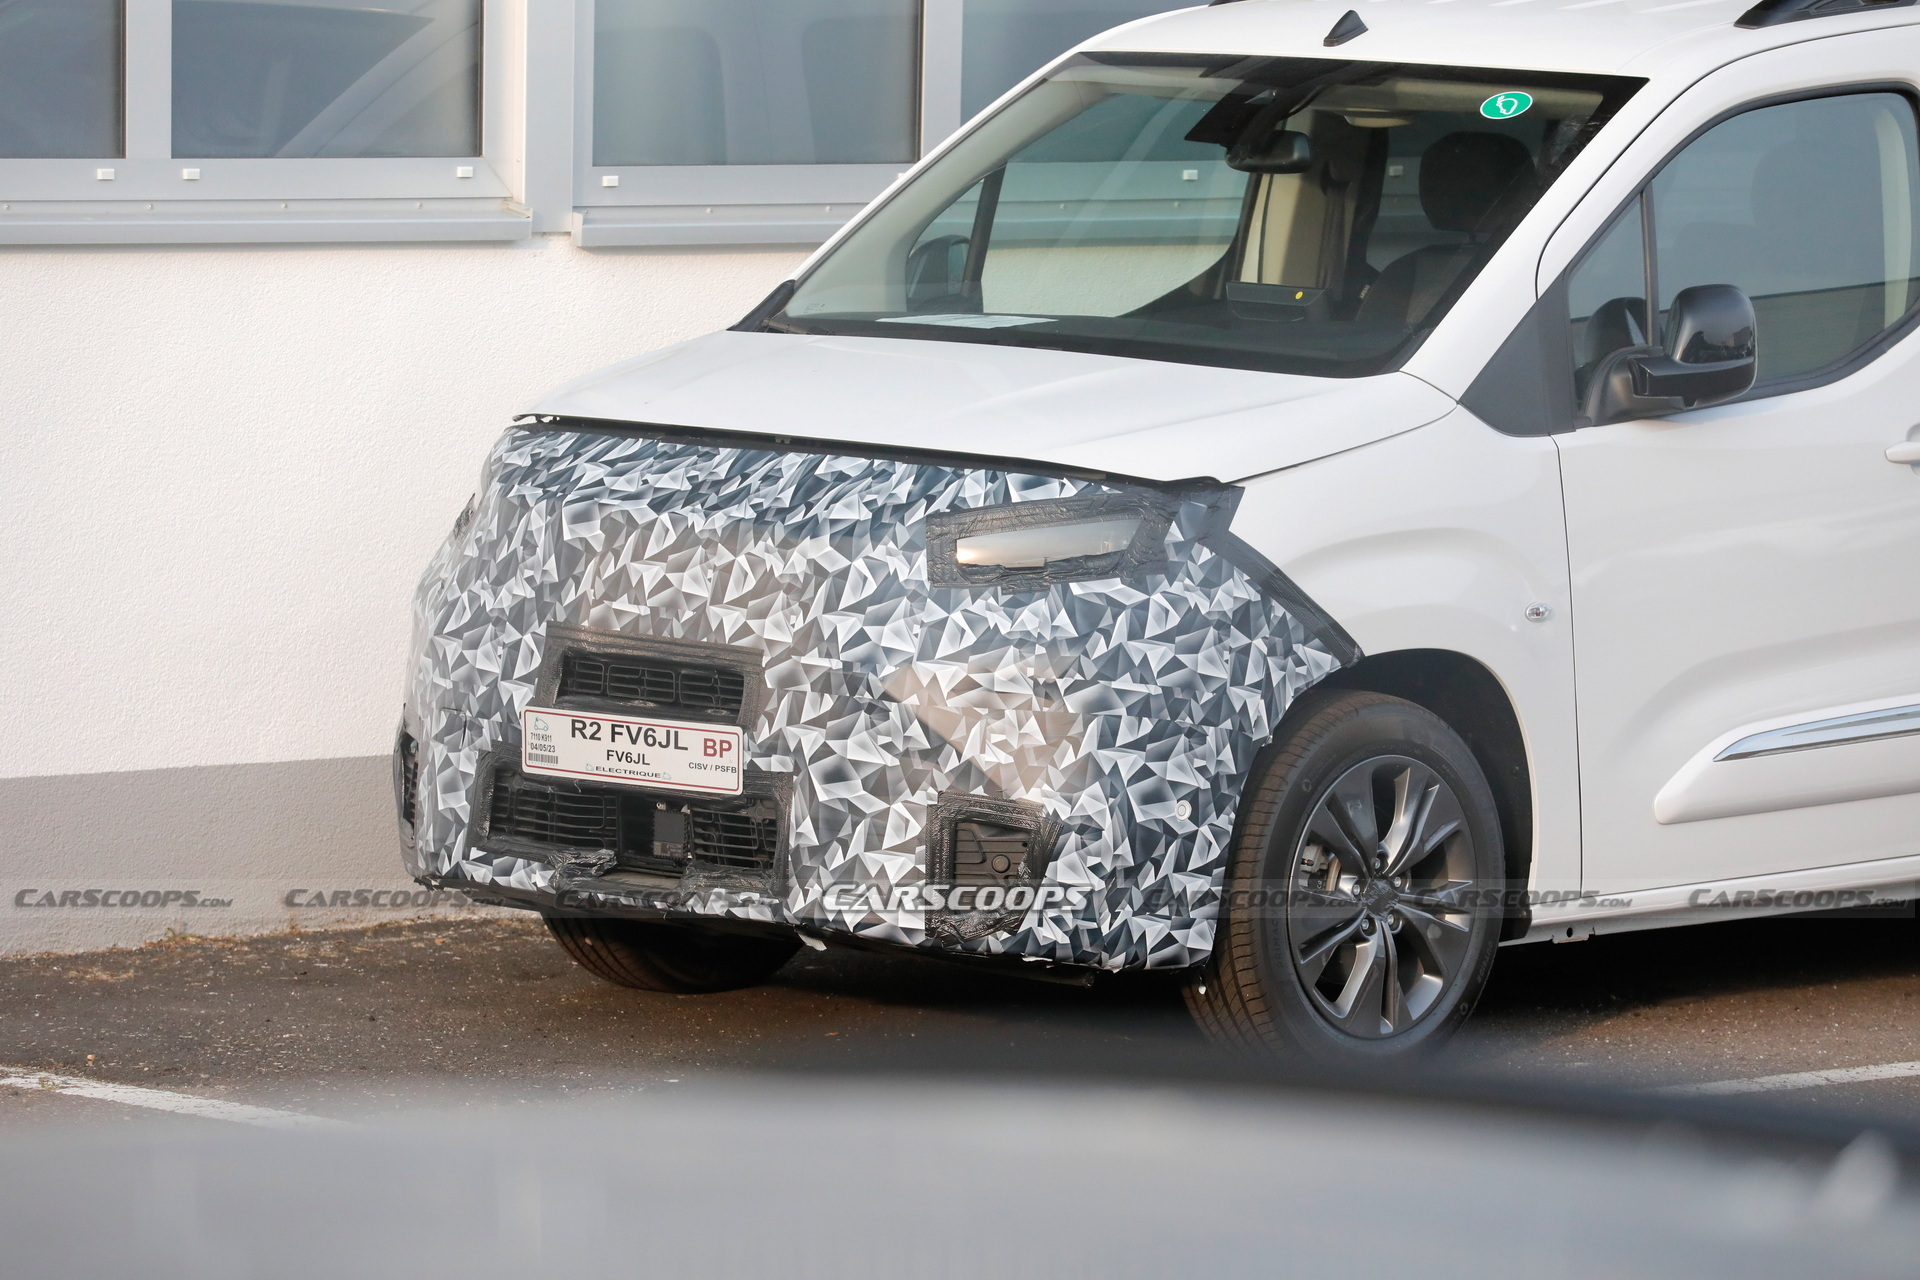 The Combo-e Life Electric Minivan Will Soon Get The Opel Visor